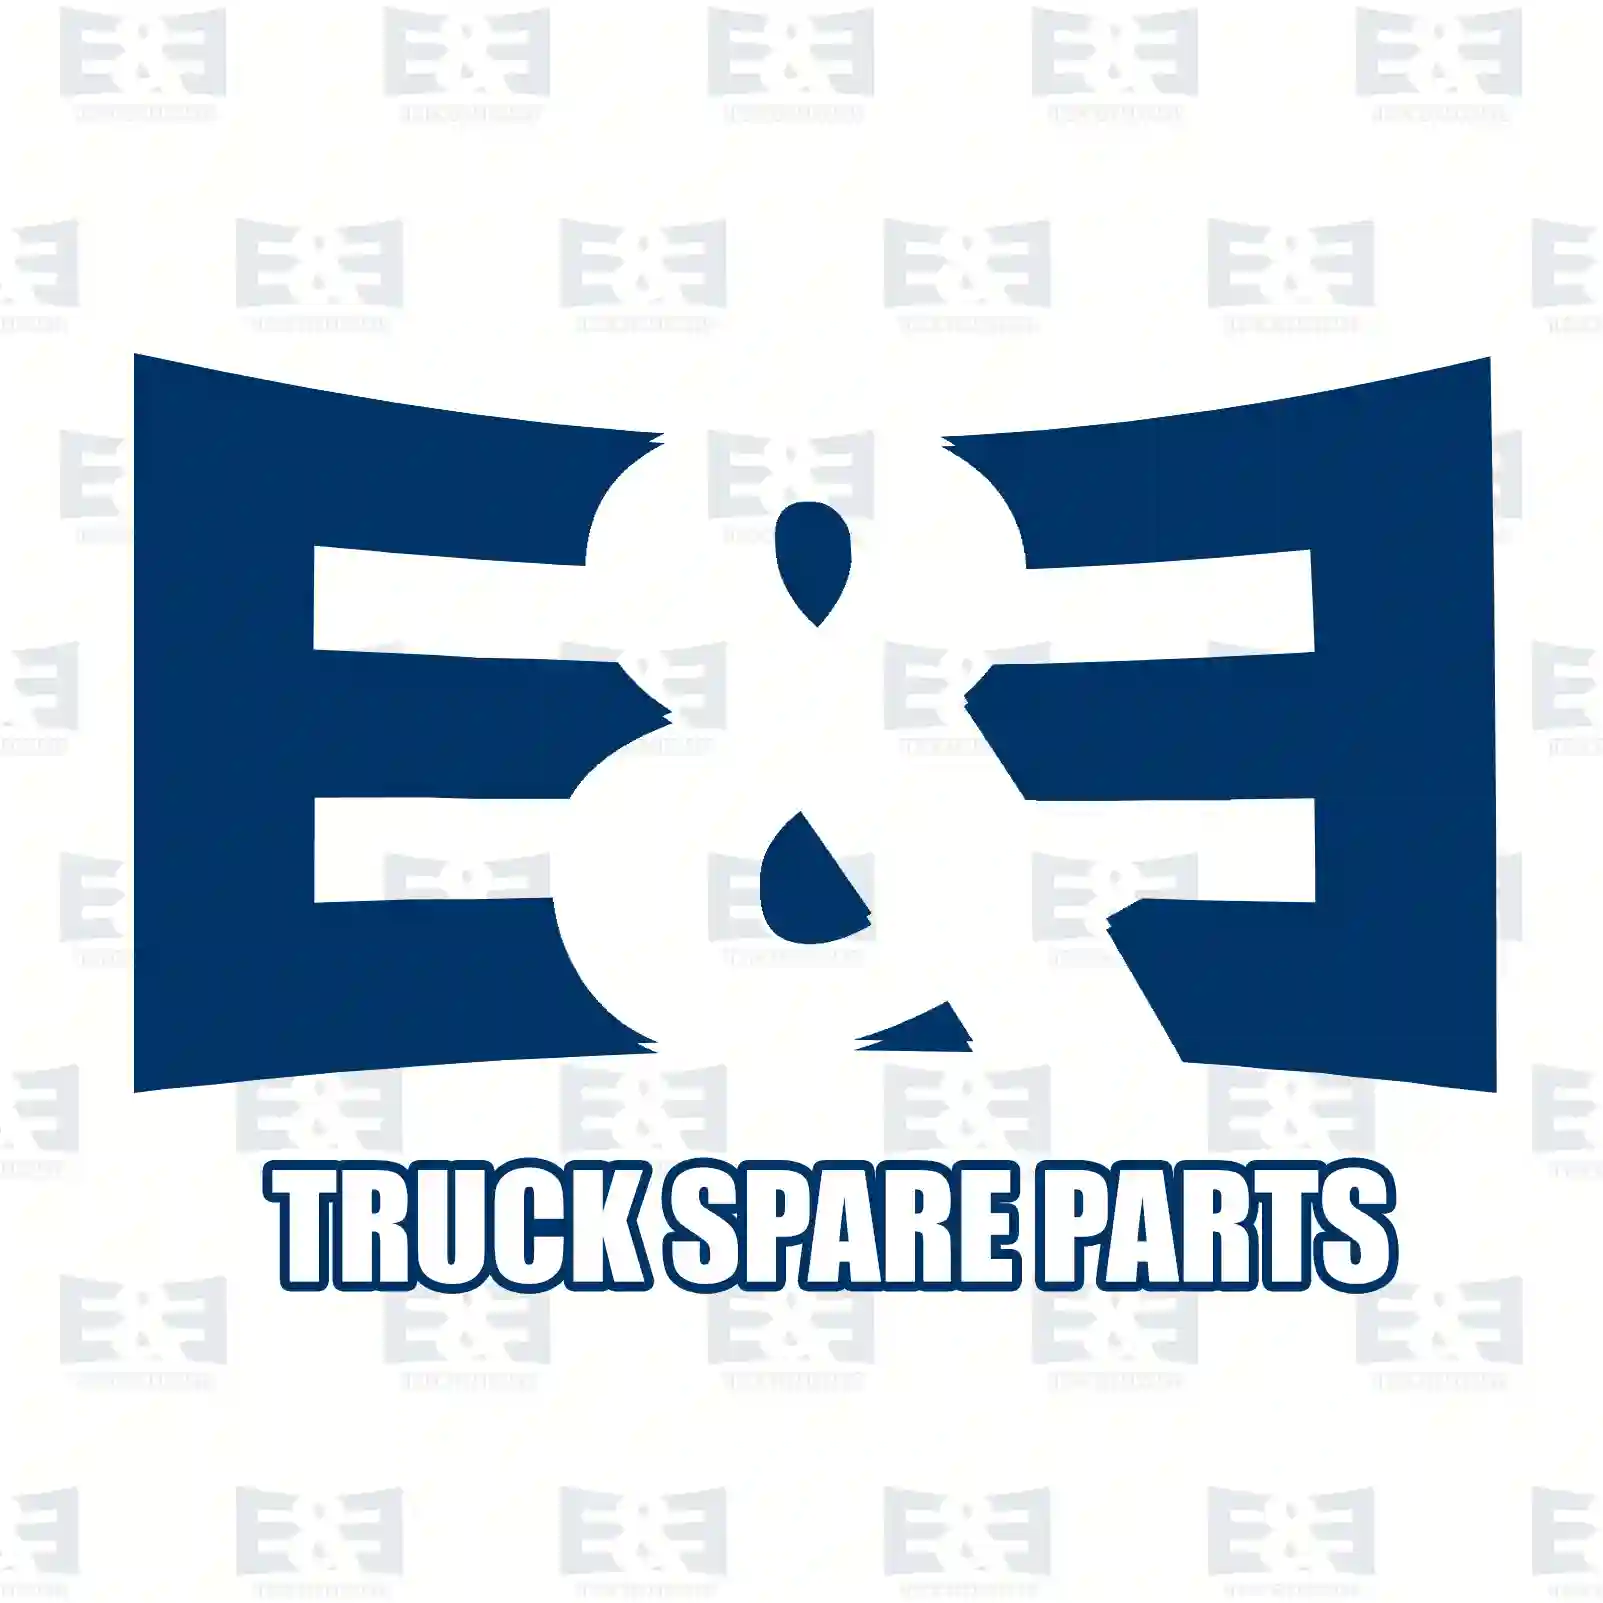 Clutch cylinder, 2E2288560, 02997458, 04774874, 2997458, 4774874 ||  2E2288560 E&E Truck Spare Parts | Truck Spare Parts, Auotomotive Spare Parts Clutch cylinder, 2E2288560, 02997458, 04774874, 2997458, 4774874 ||  2E2288560 E&E Truck Spare Parts | Truck Spare Parts, Auotomotive Spare Parts